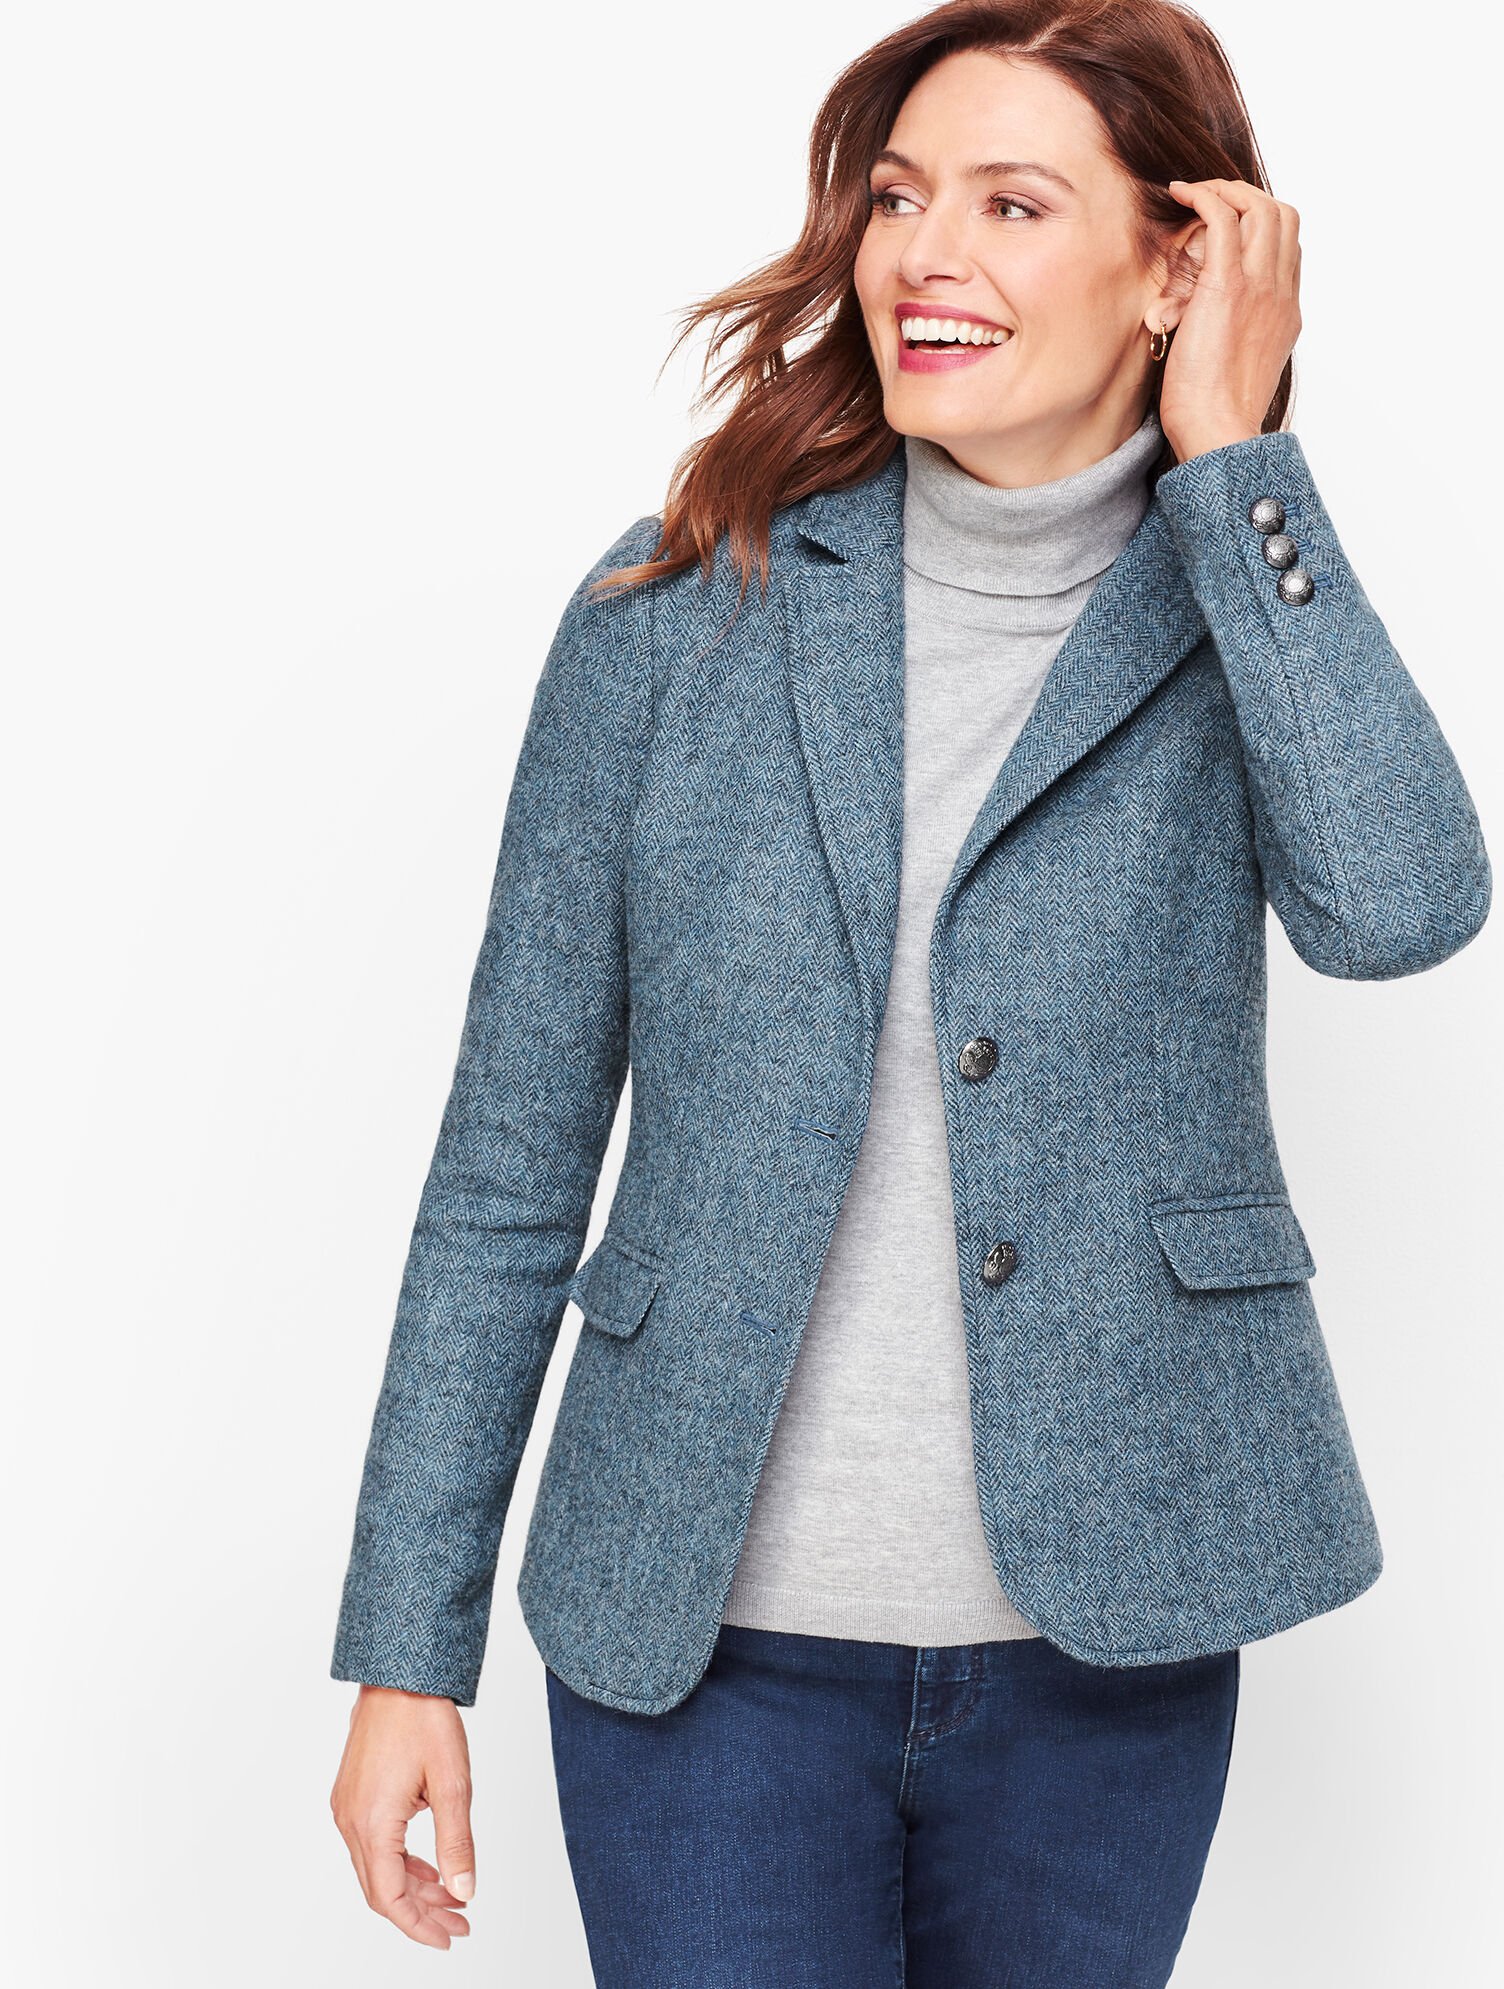 Talbots Wool Blend Blazer Jacket Womens Size 2P 2 Petite Pockets Knit Gray